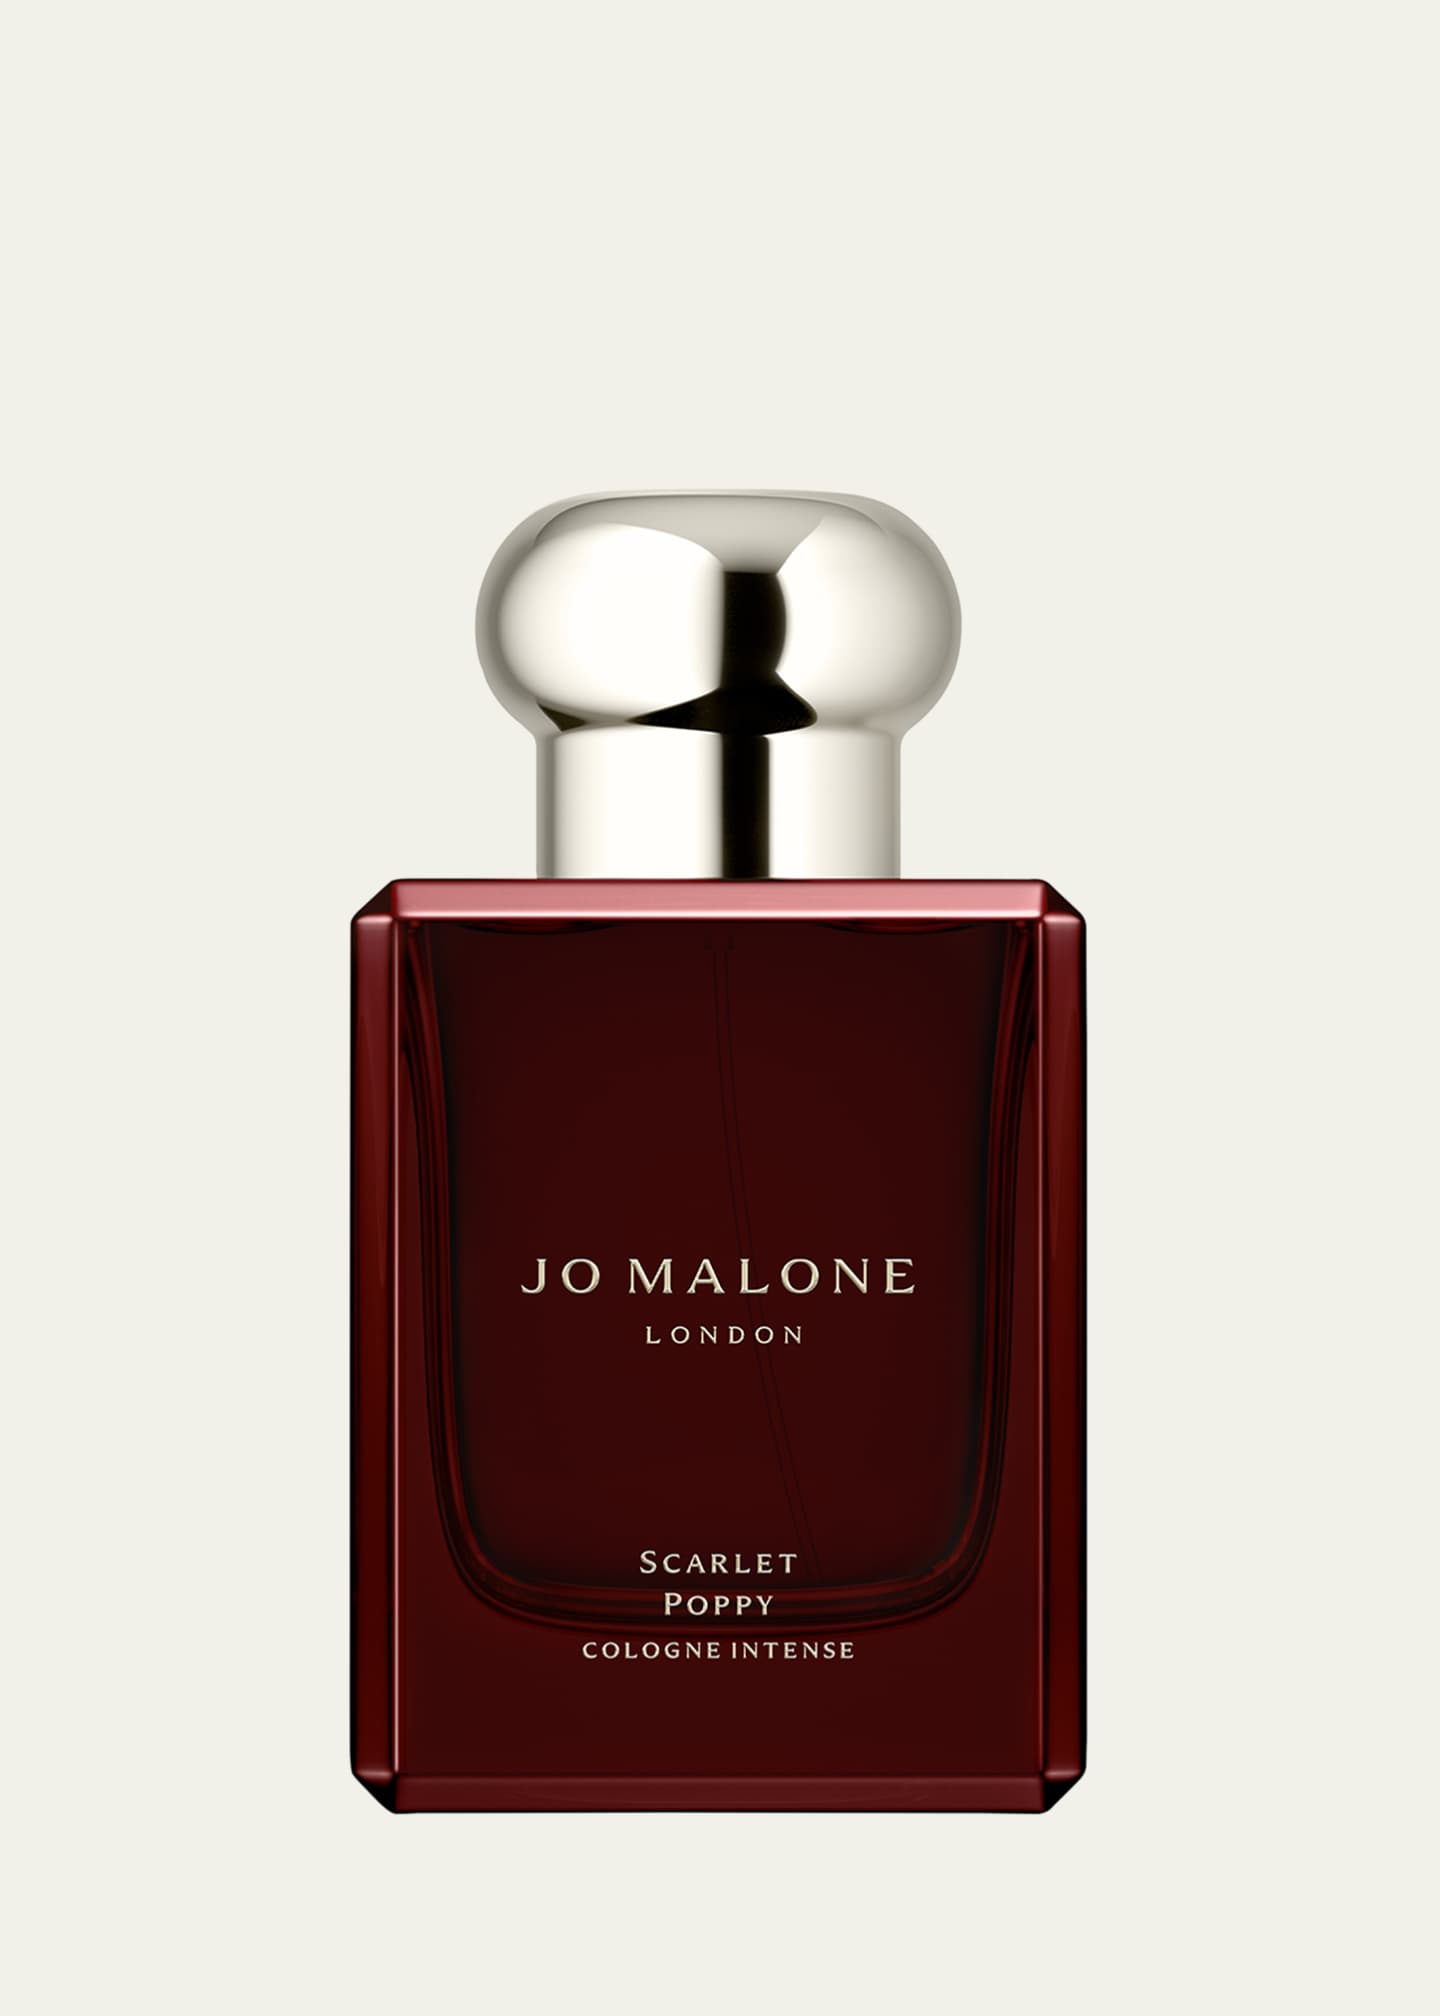 Jo Malone London Scarlet Poppy Cologne Intense, 1.7 oz. - Bergdorf